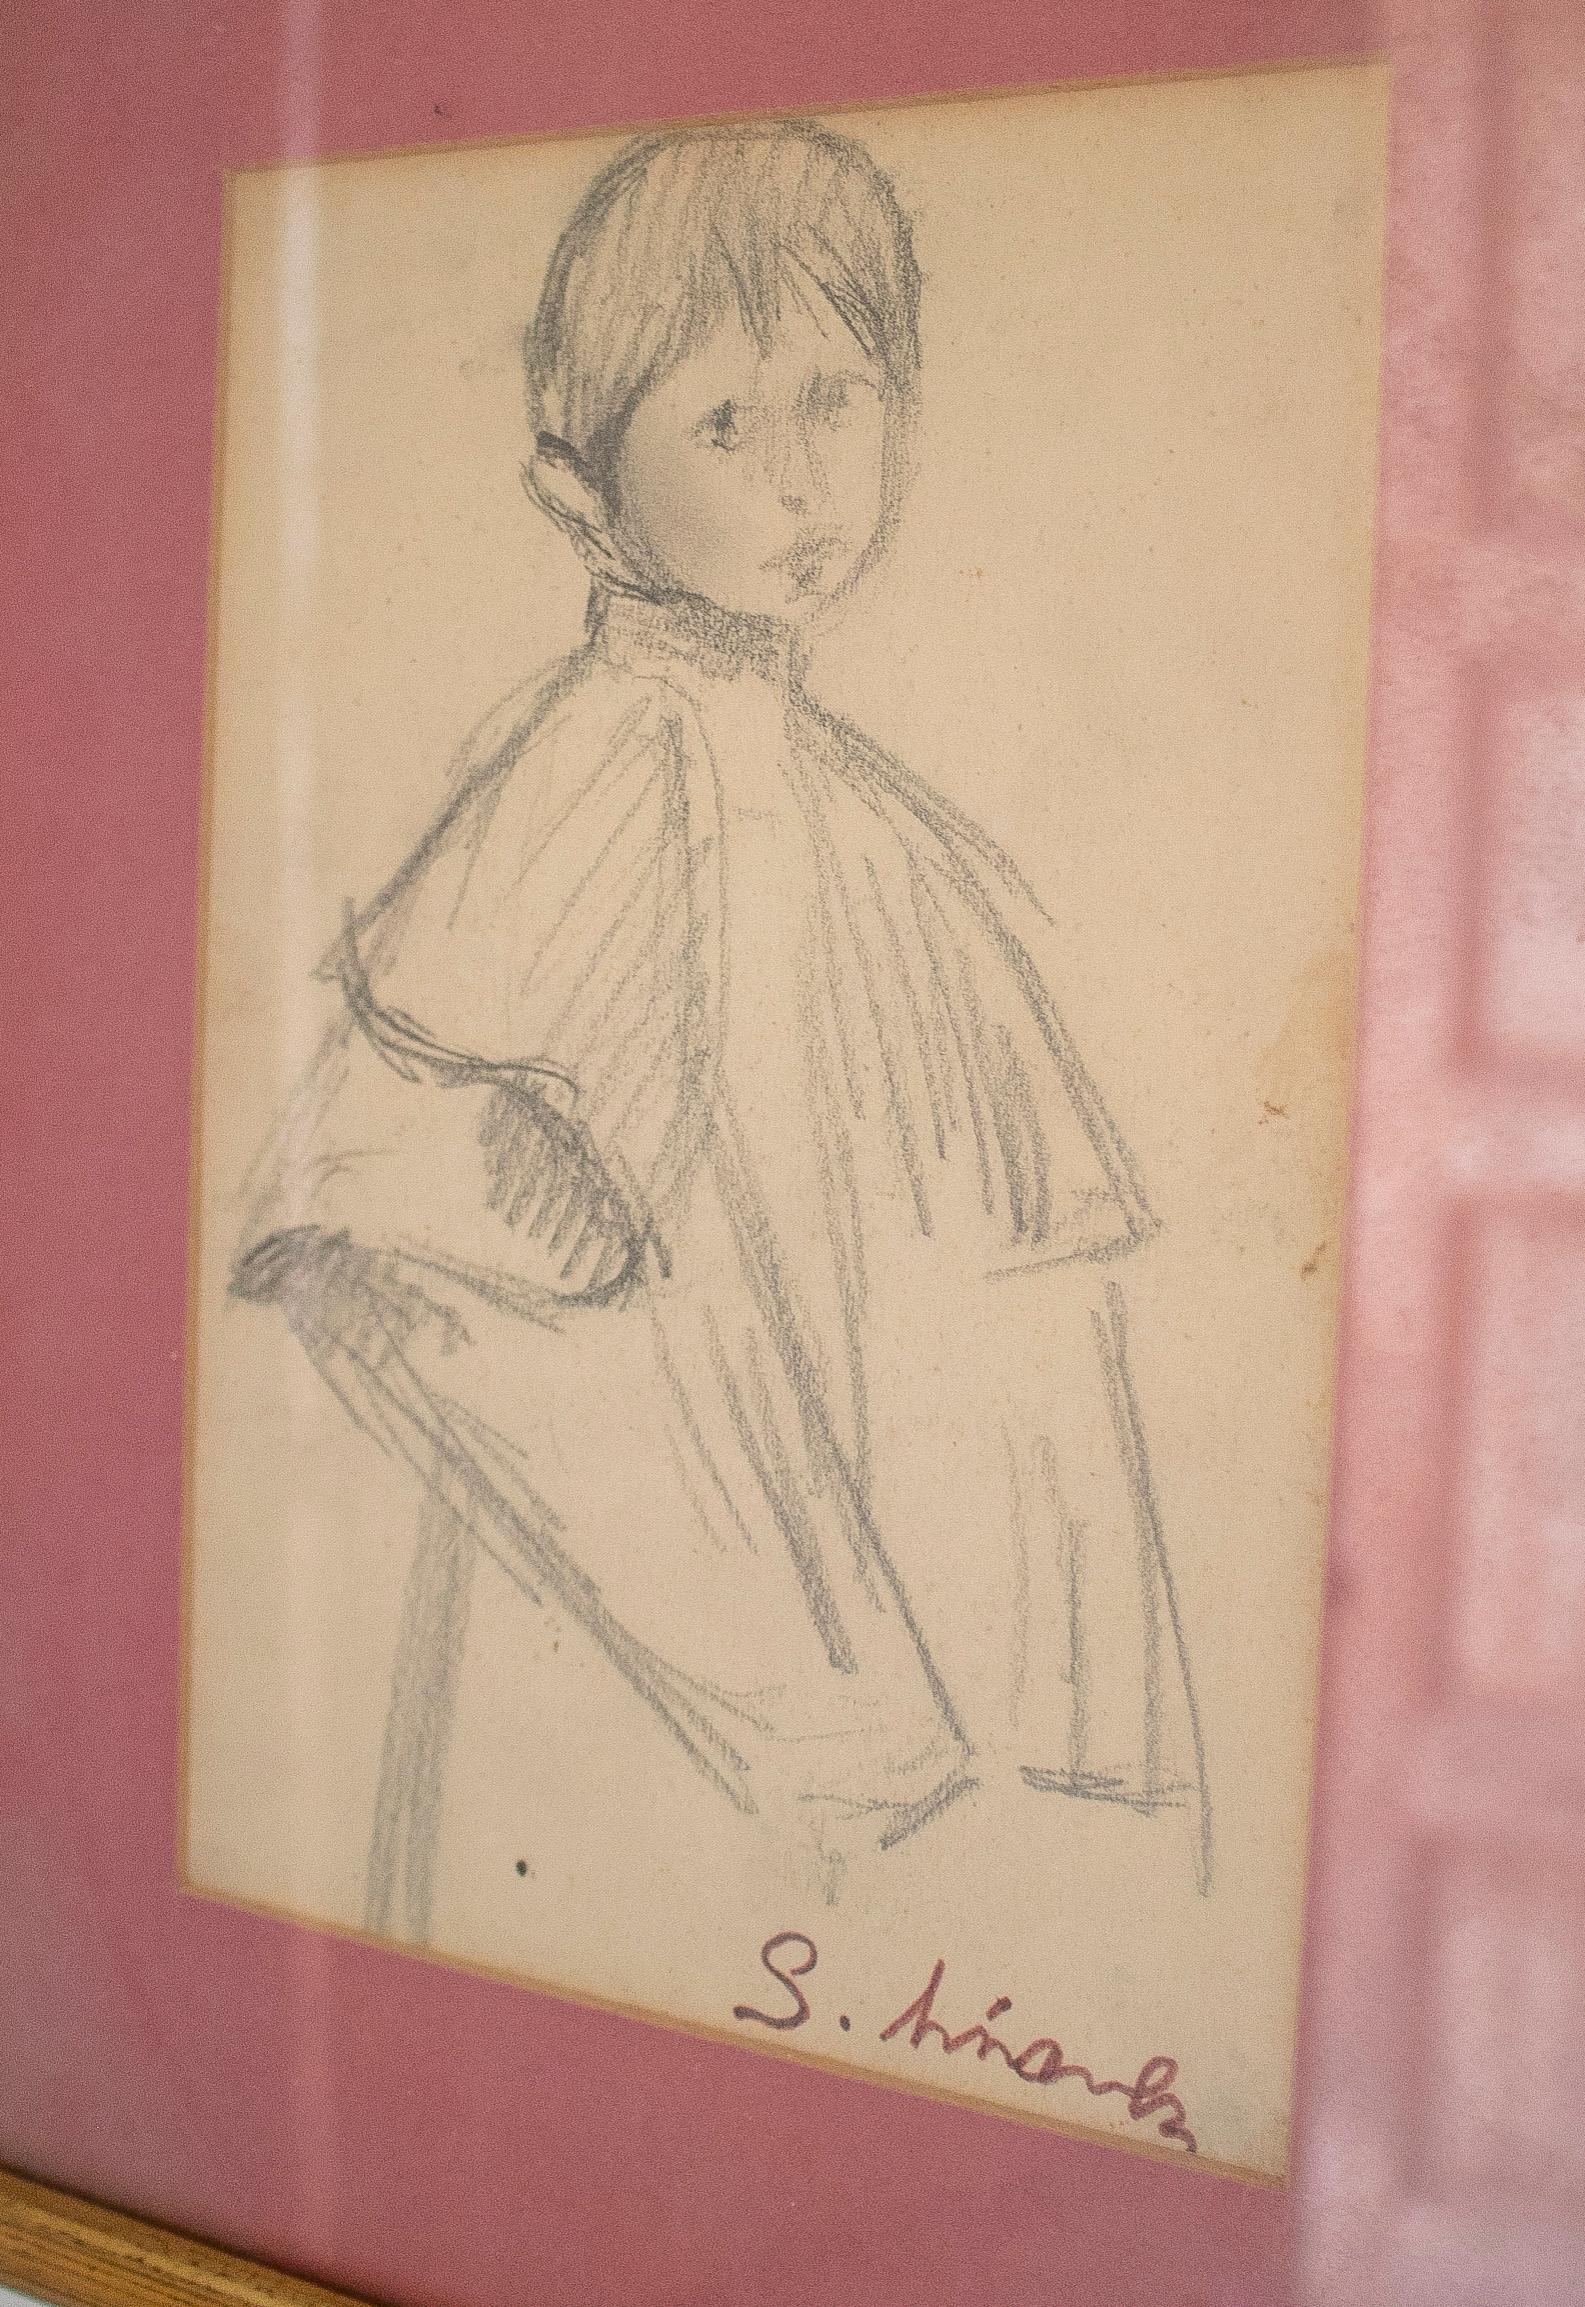 Vintage 1970s Spanish boy pencil drawn portrait framed and signed 

Interior measurements: 22 x 15 cm.
 